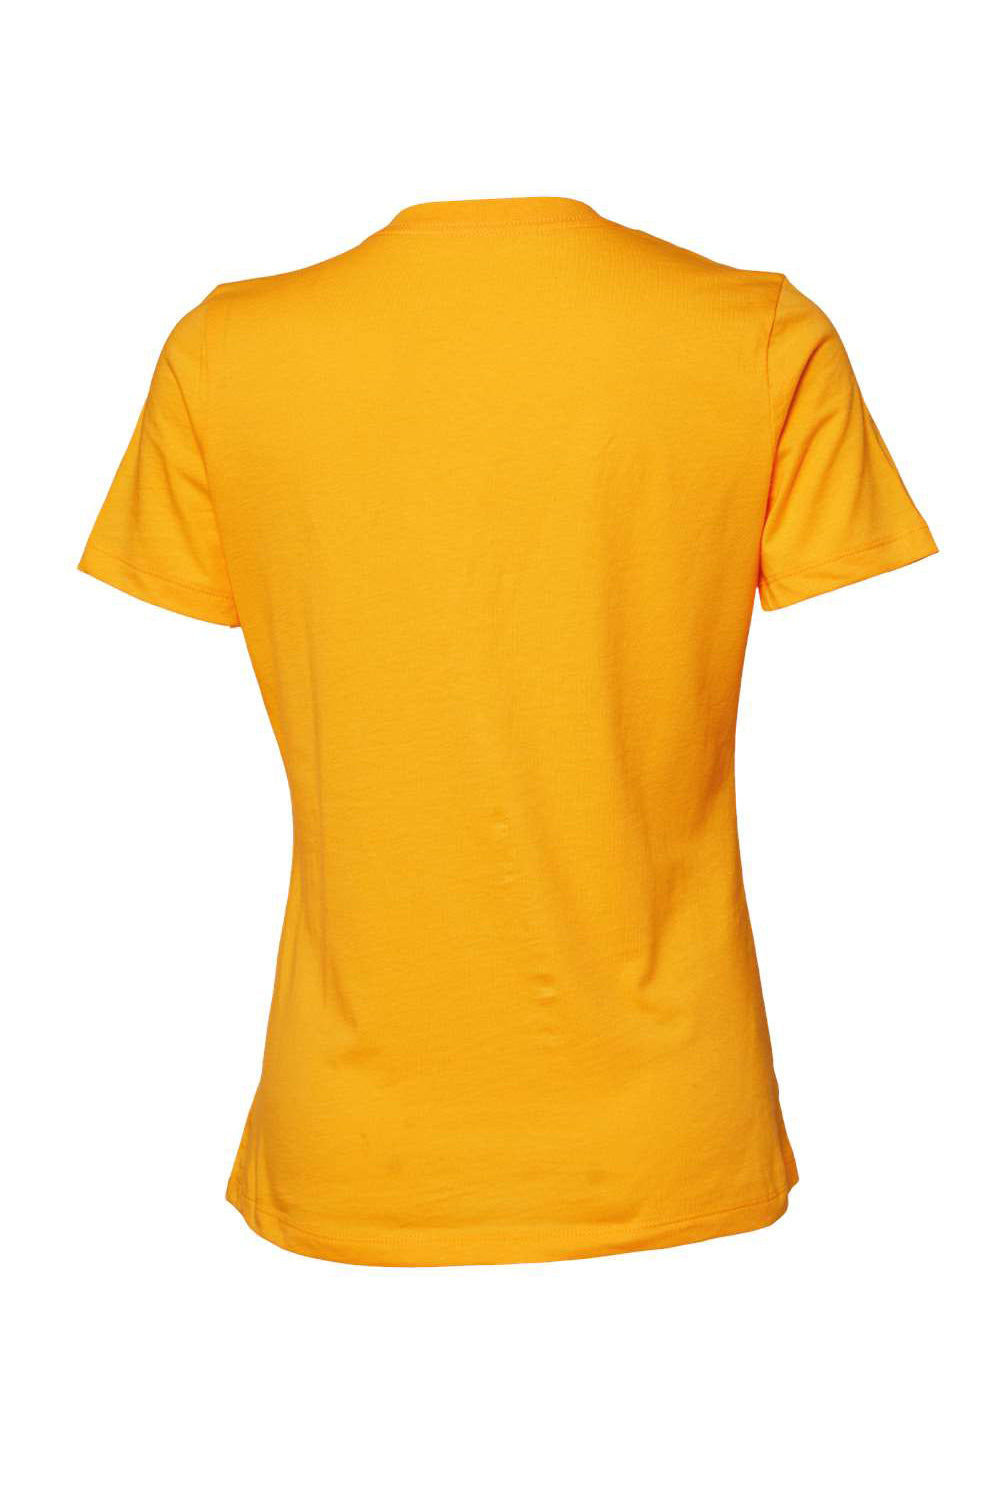 Bella + Canvas BC6400/B6400/6400 Womens Relaxed Jersey Short Sleeve Crewneck T-Shirt Mustard Yellow Flat Back